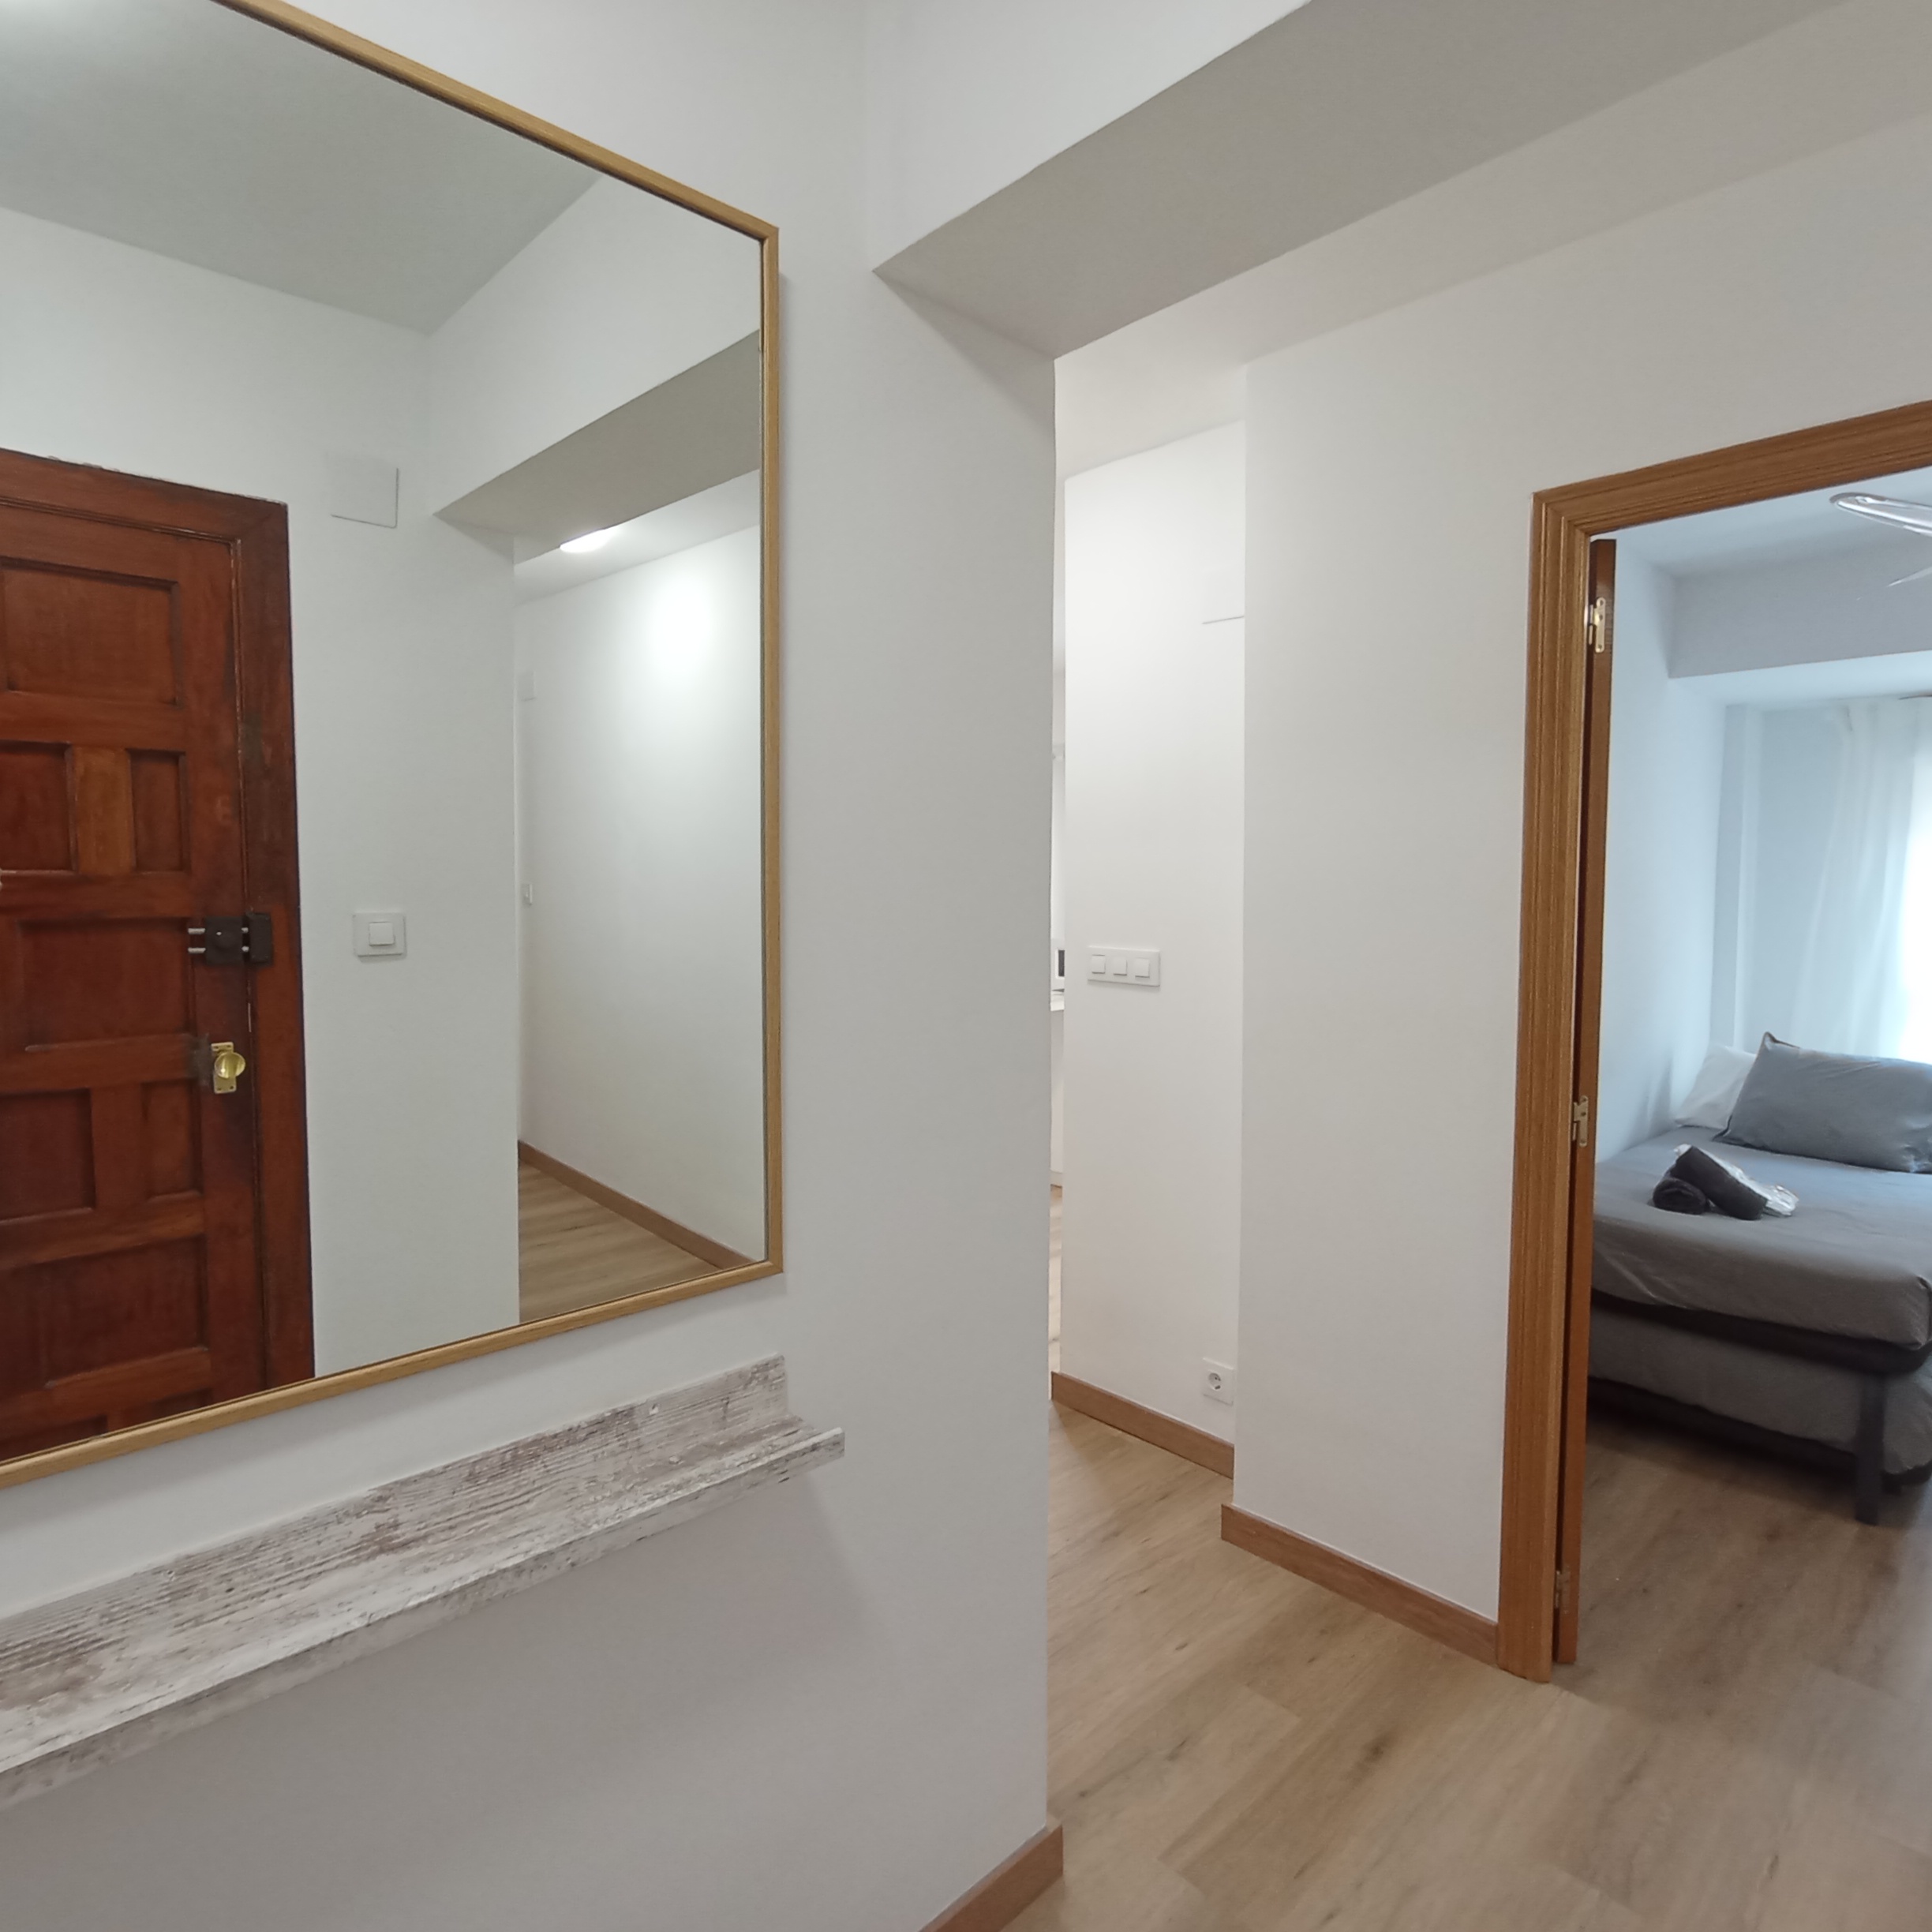 Trafalgar - 3 Bedroom apartment for rent in Valencia corridor